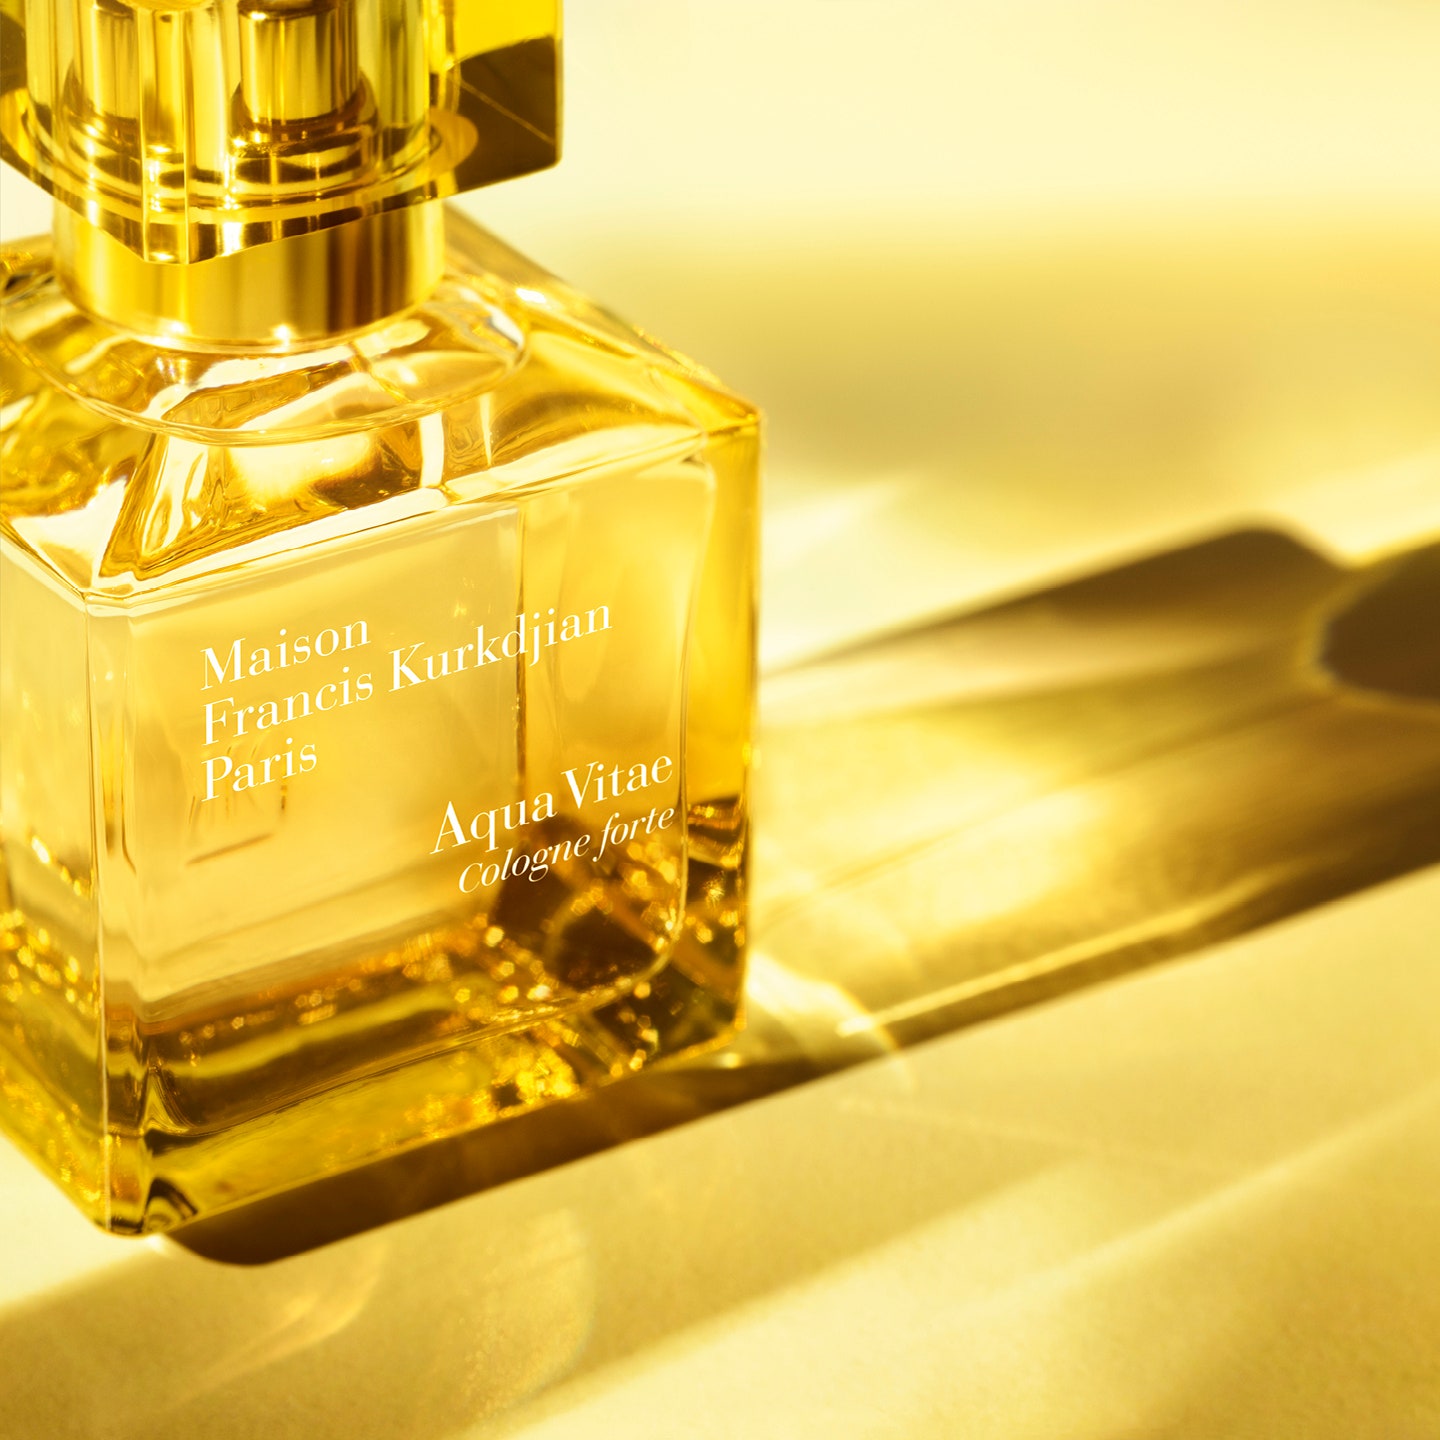 Новая коллекция ароматов Cologne Forte от Maison Francis Kurkdjian